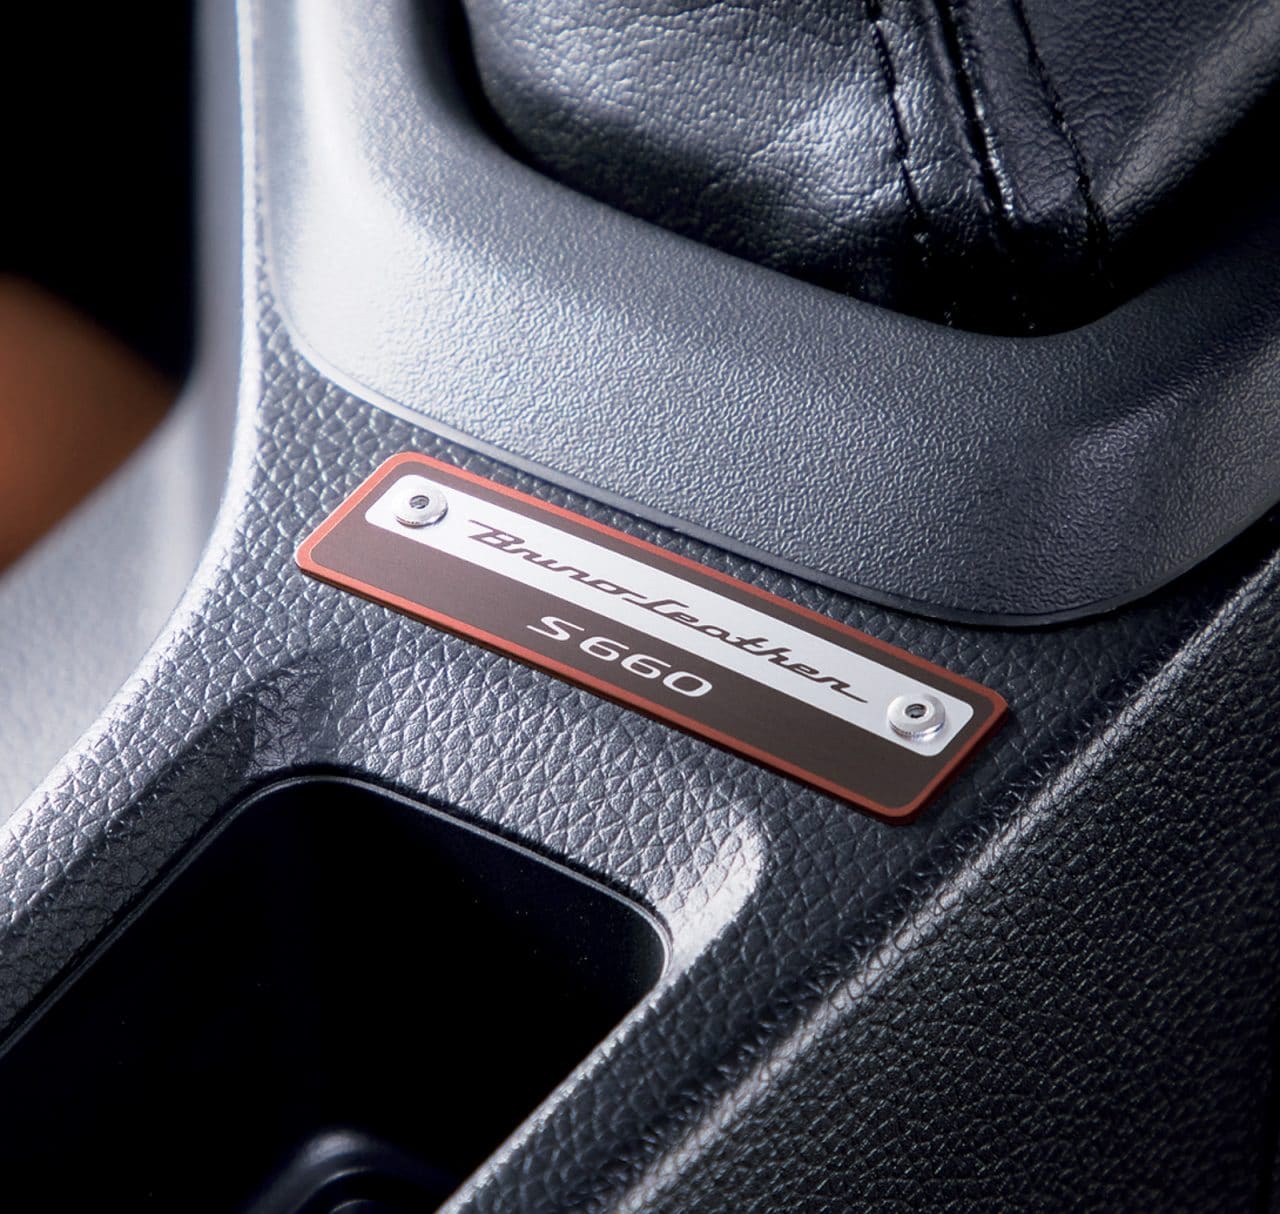 Honda S660 Bruno Leather Edition